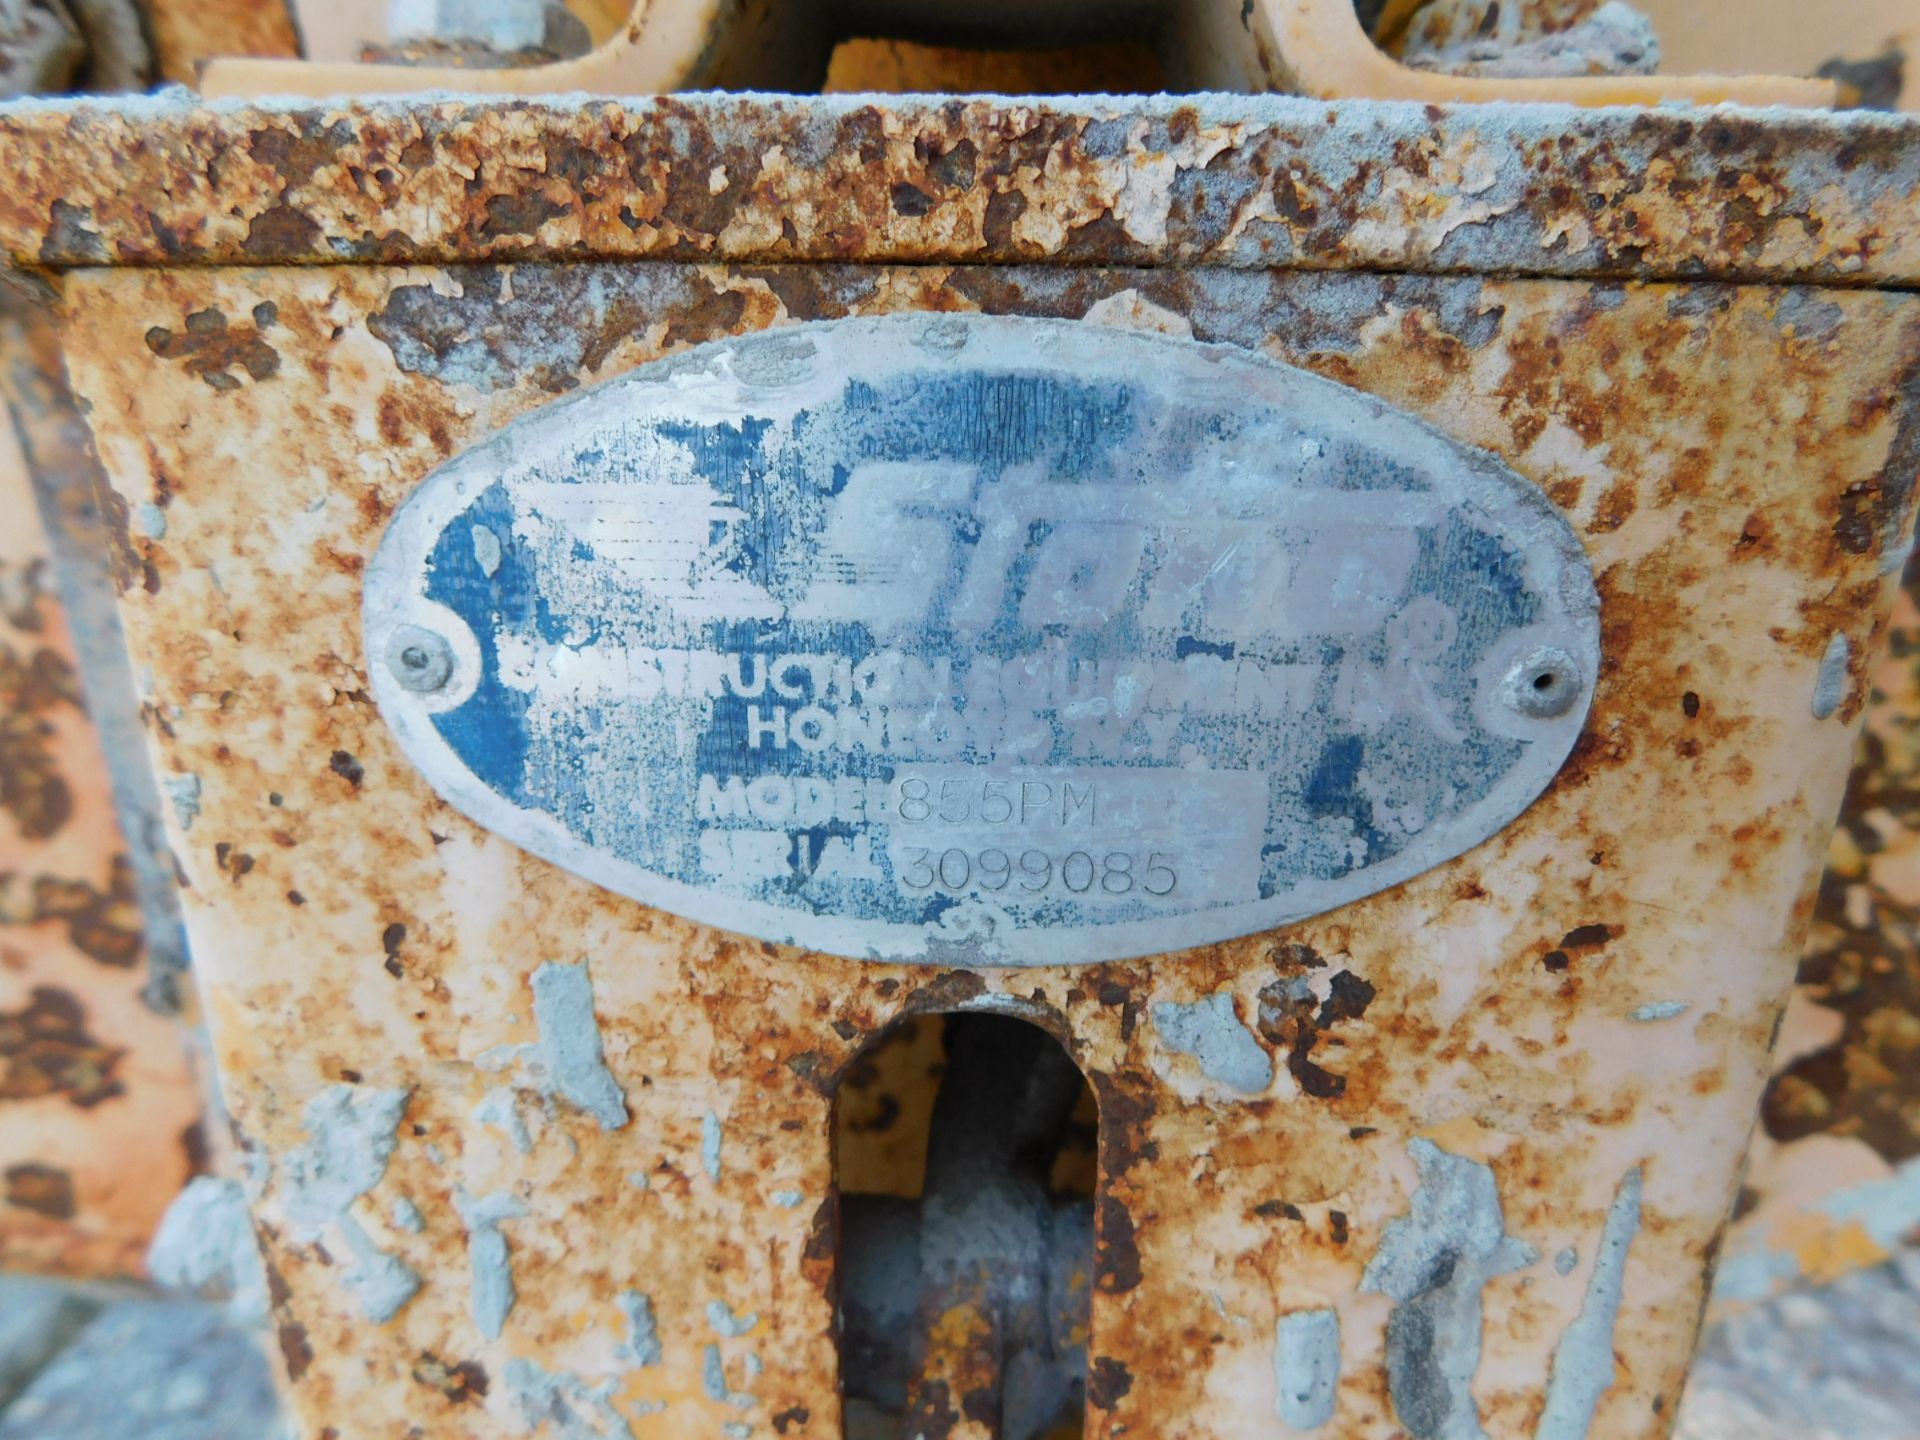 Stone Model 855PM Gas Powered Mortar Mixer, s/n 3099085, Needs Repair - Image 8 of 10